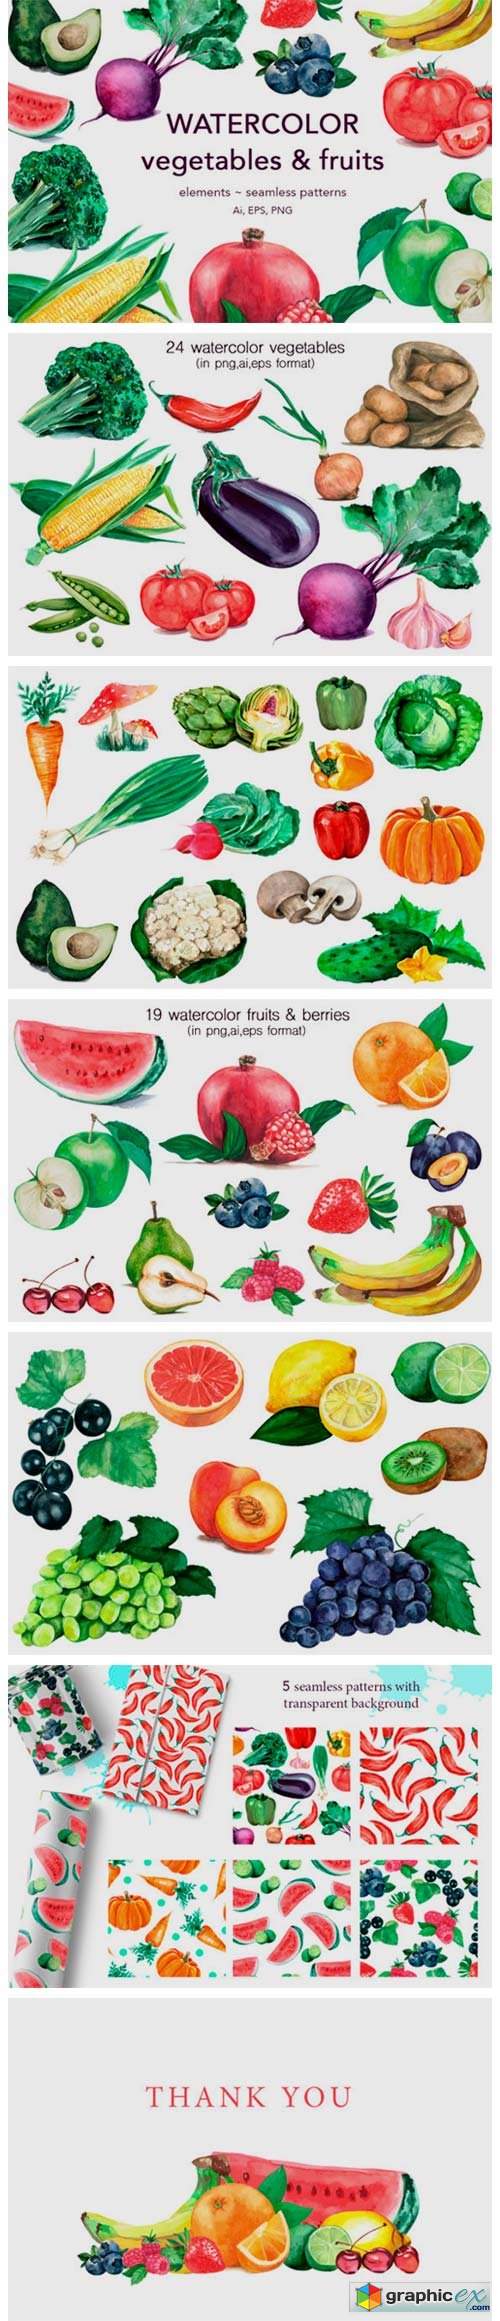 Watercolor Vegetables & Fruits 2151243